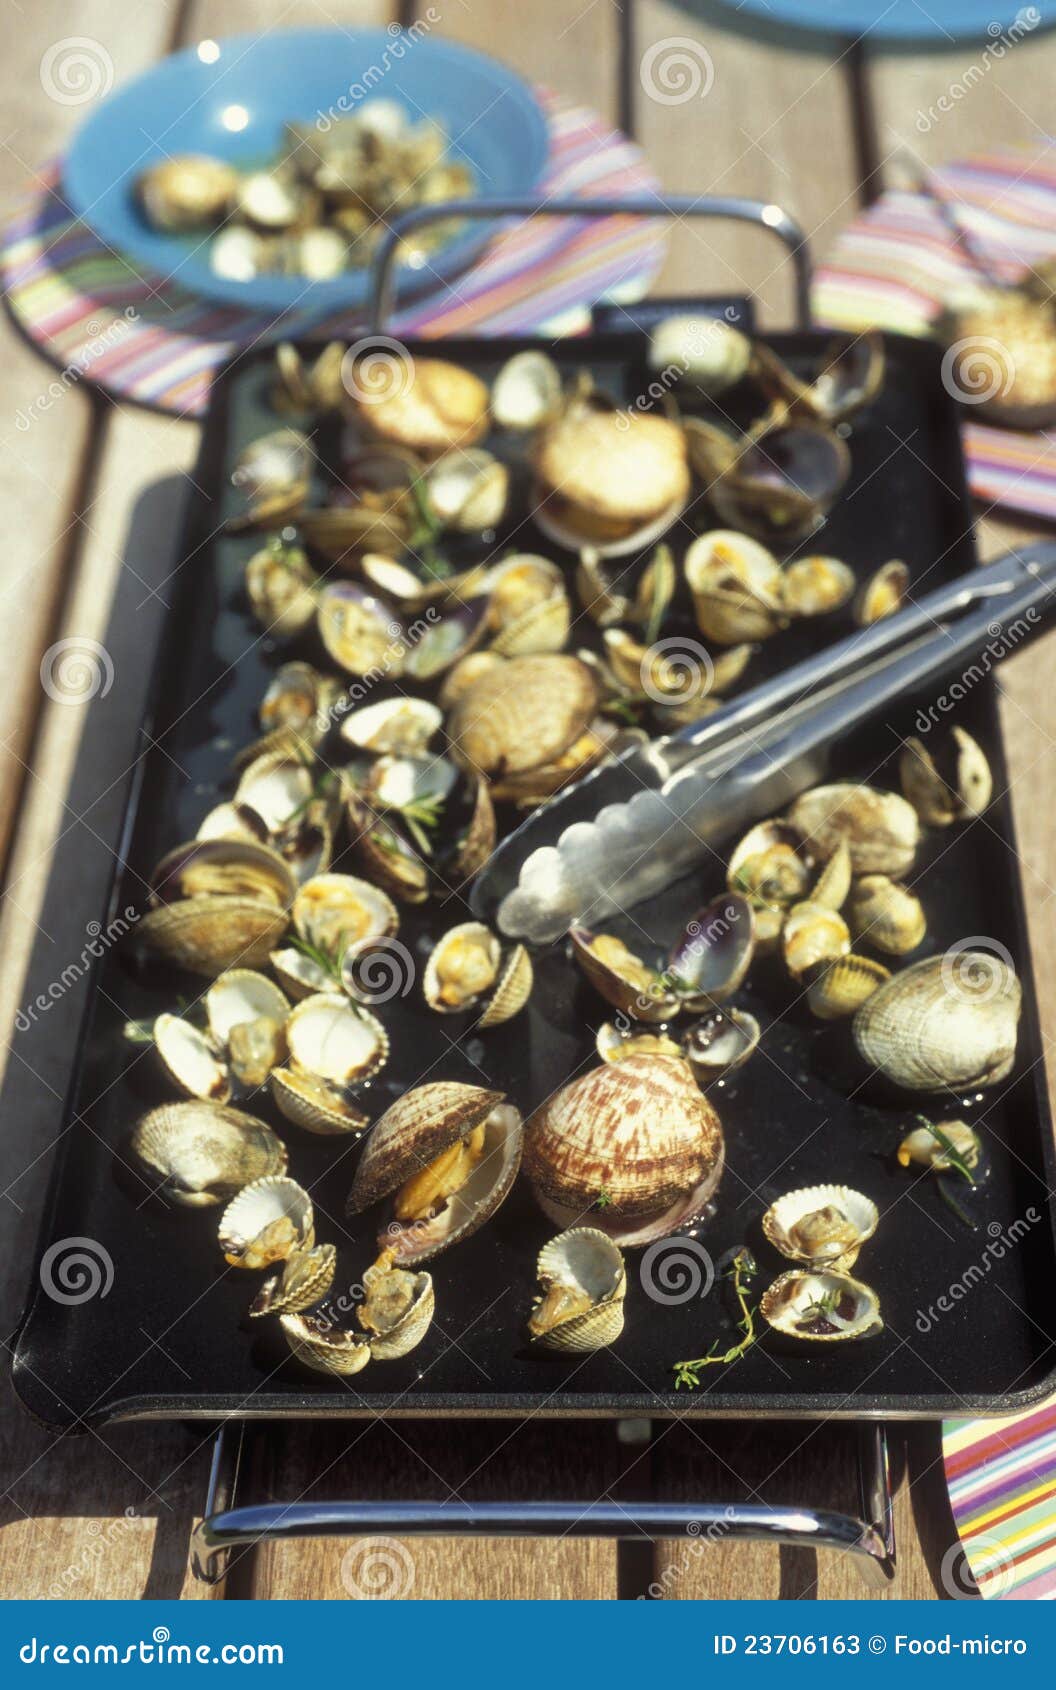 shellfish cooked a la plancha